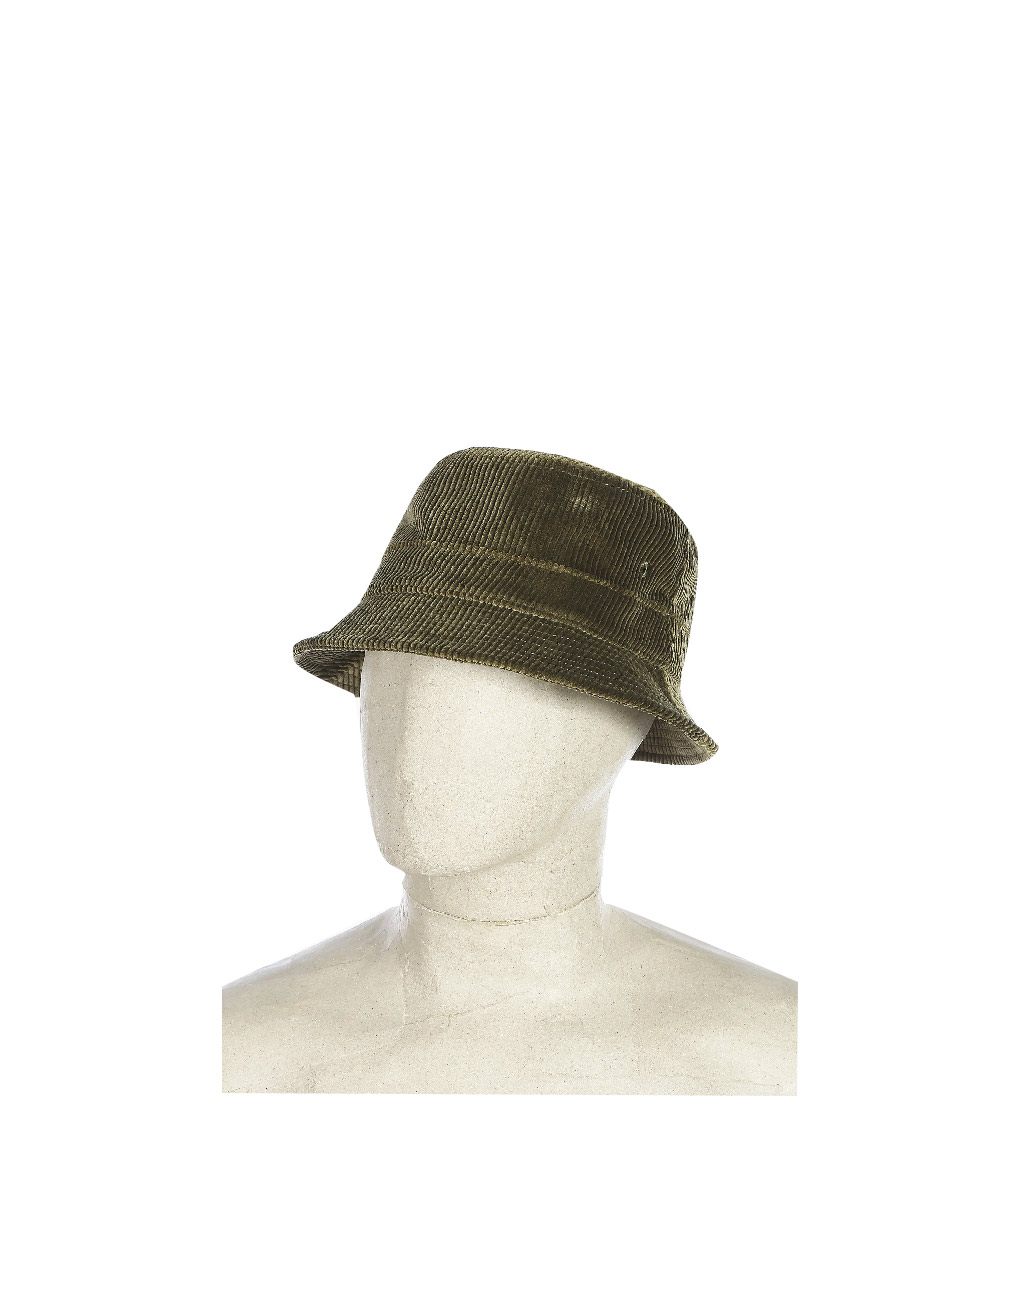 Universal Works – Bucket hat in olive brisbane cord